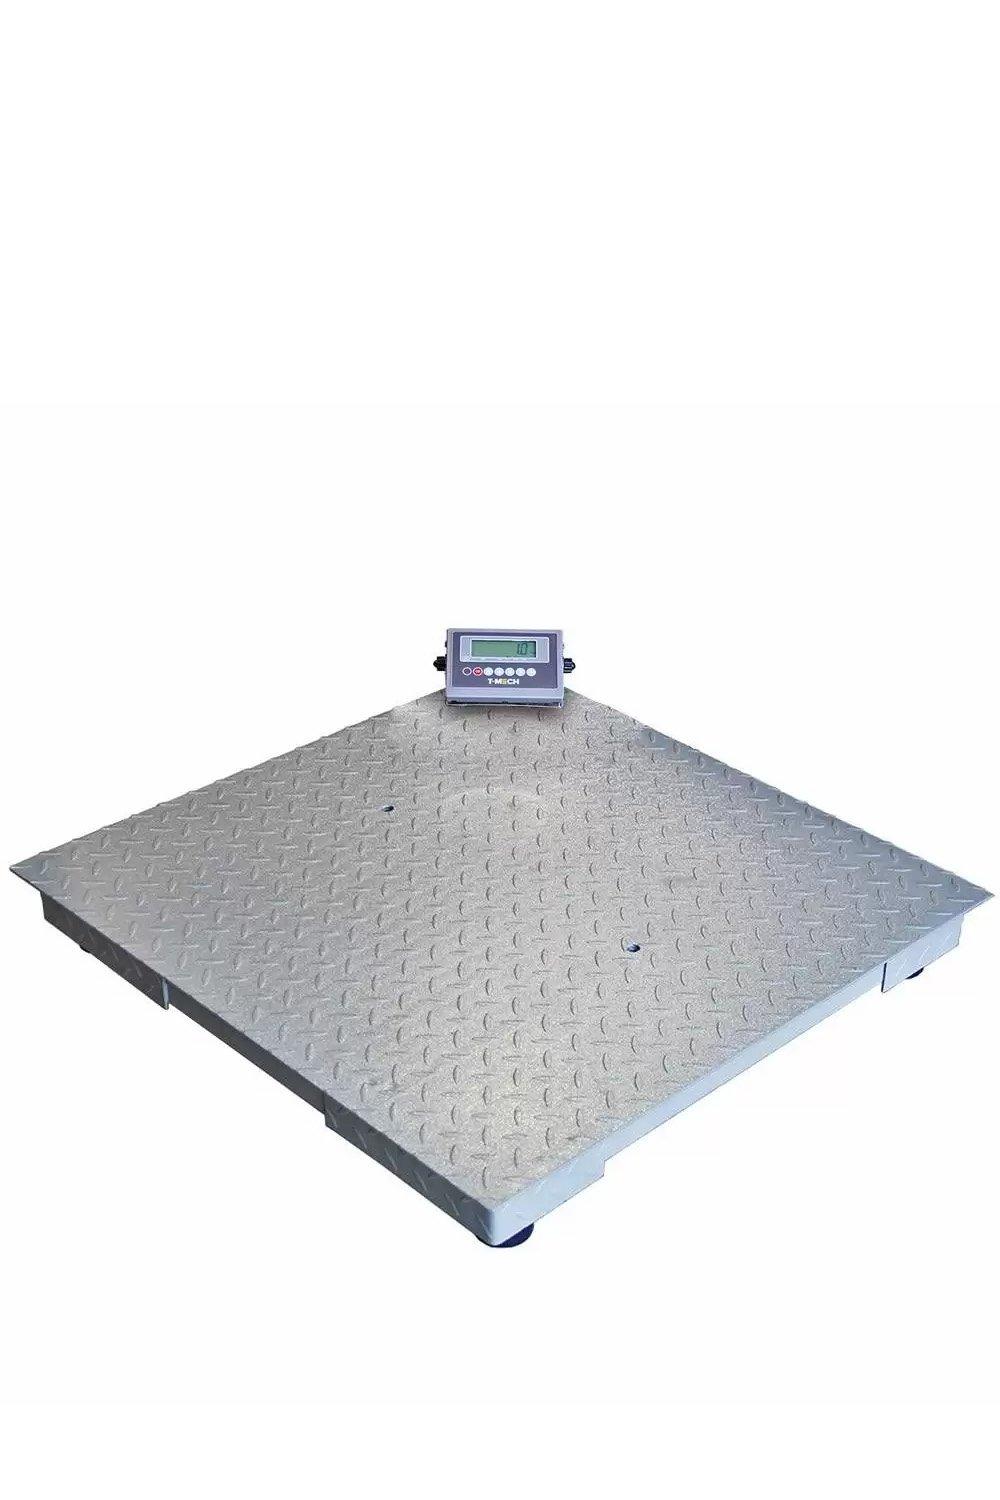 120cm Industrial Pallet Platform Scales